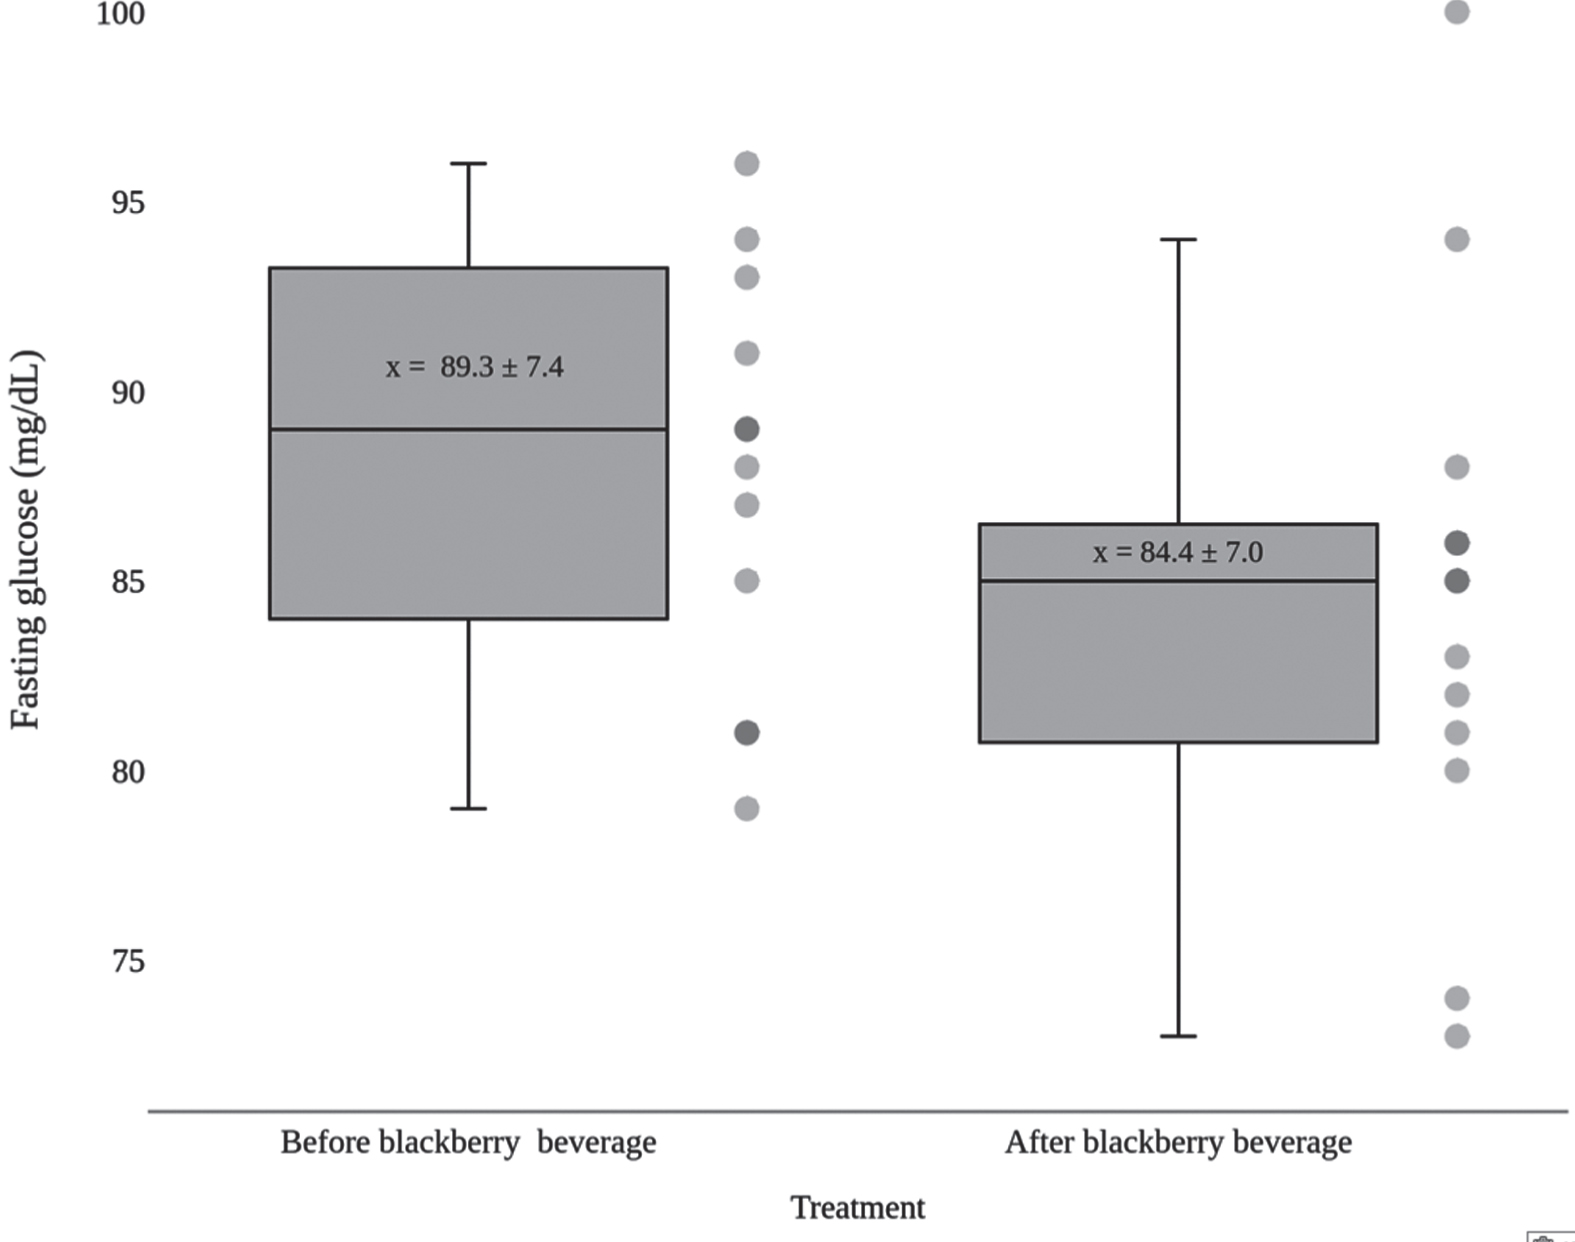 Effect of highland blackberry beverage on plasma glucose levels of study participants.